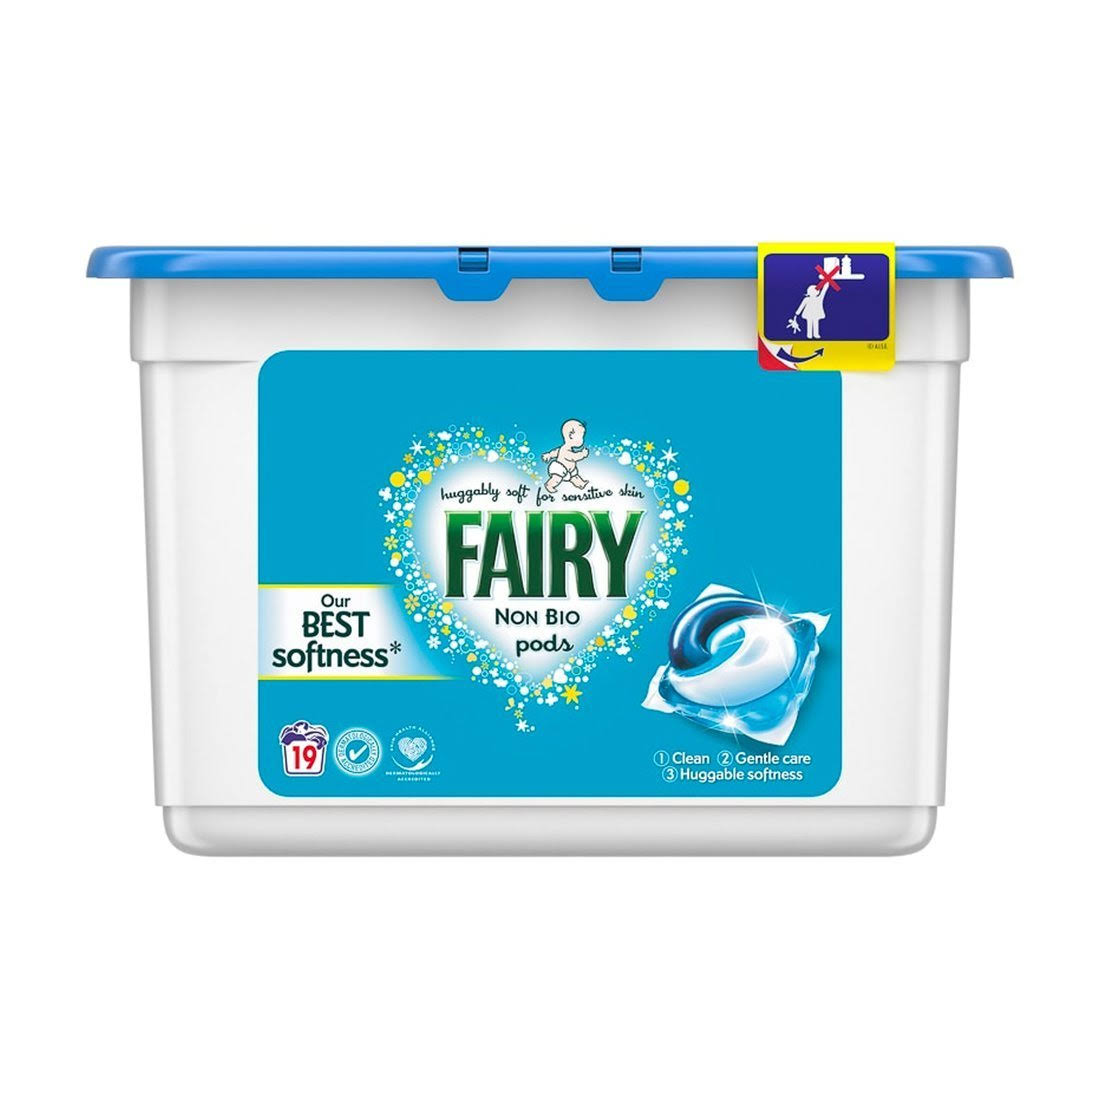 Fairy Non Bio Washing Pods - 19 Pack